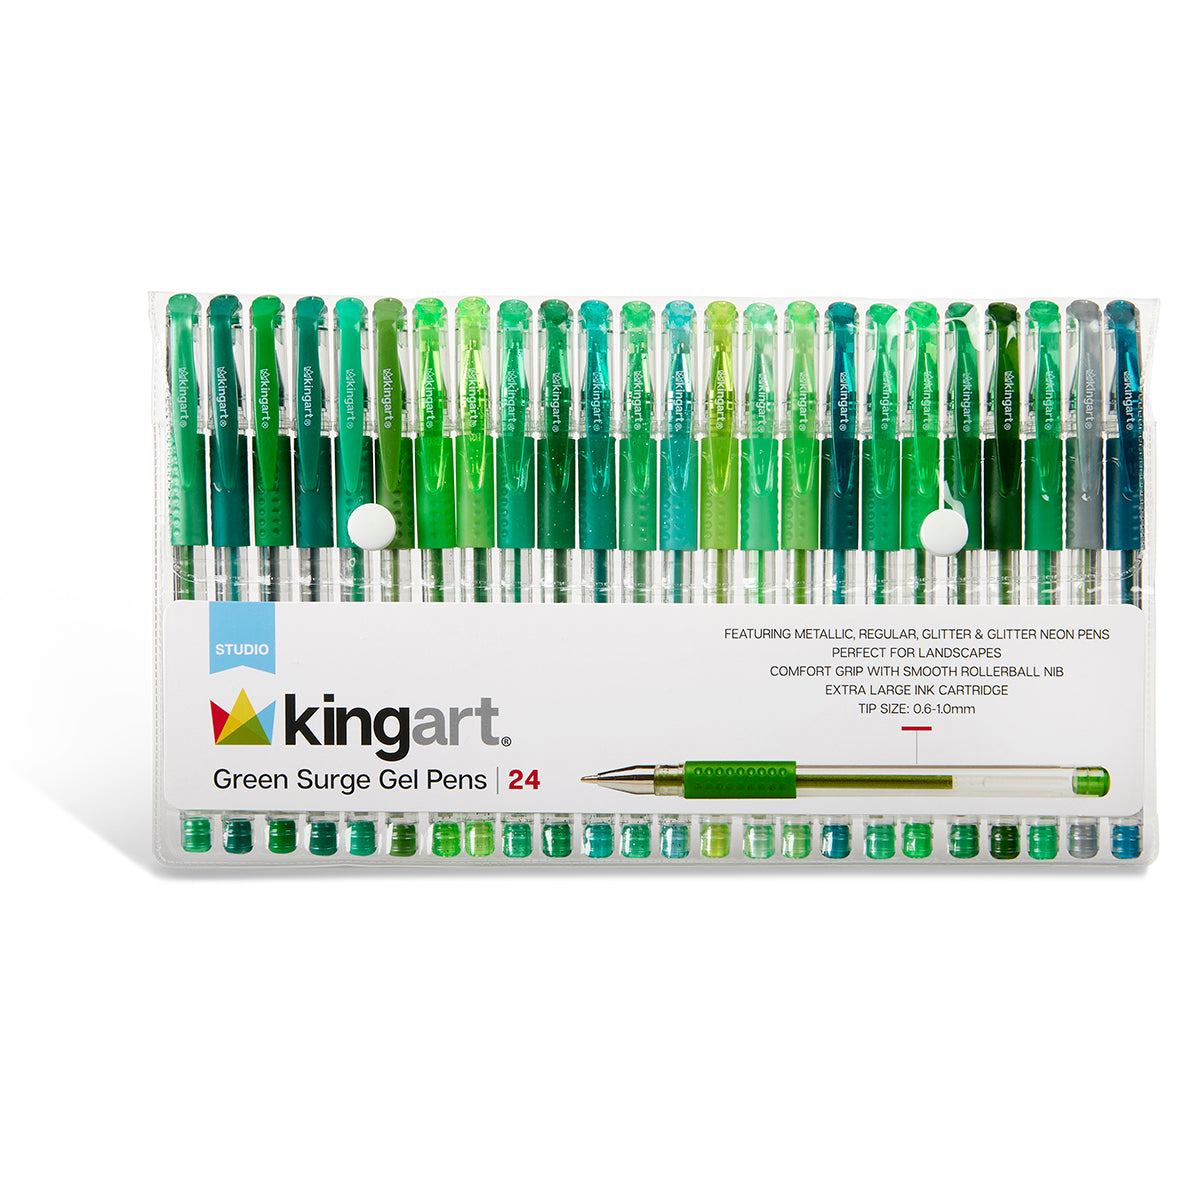 Gel pens Set 12/24 100 Colored Gel Pen Tip Glitter Gel pens with